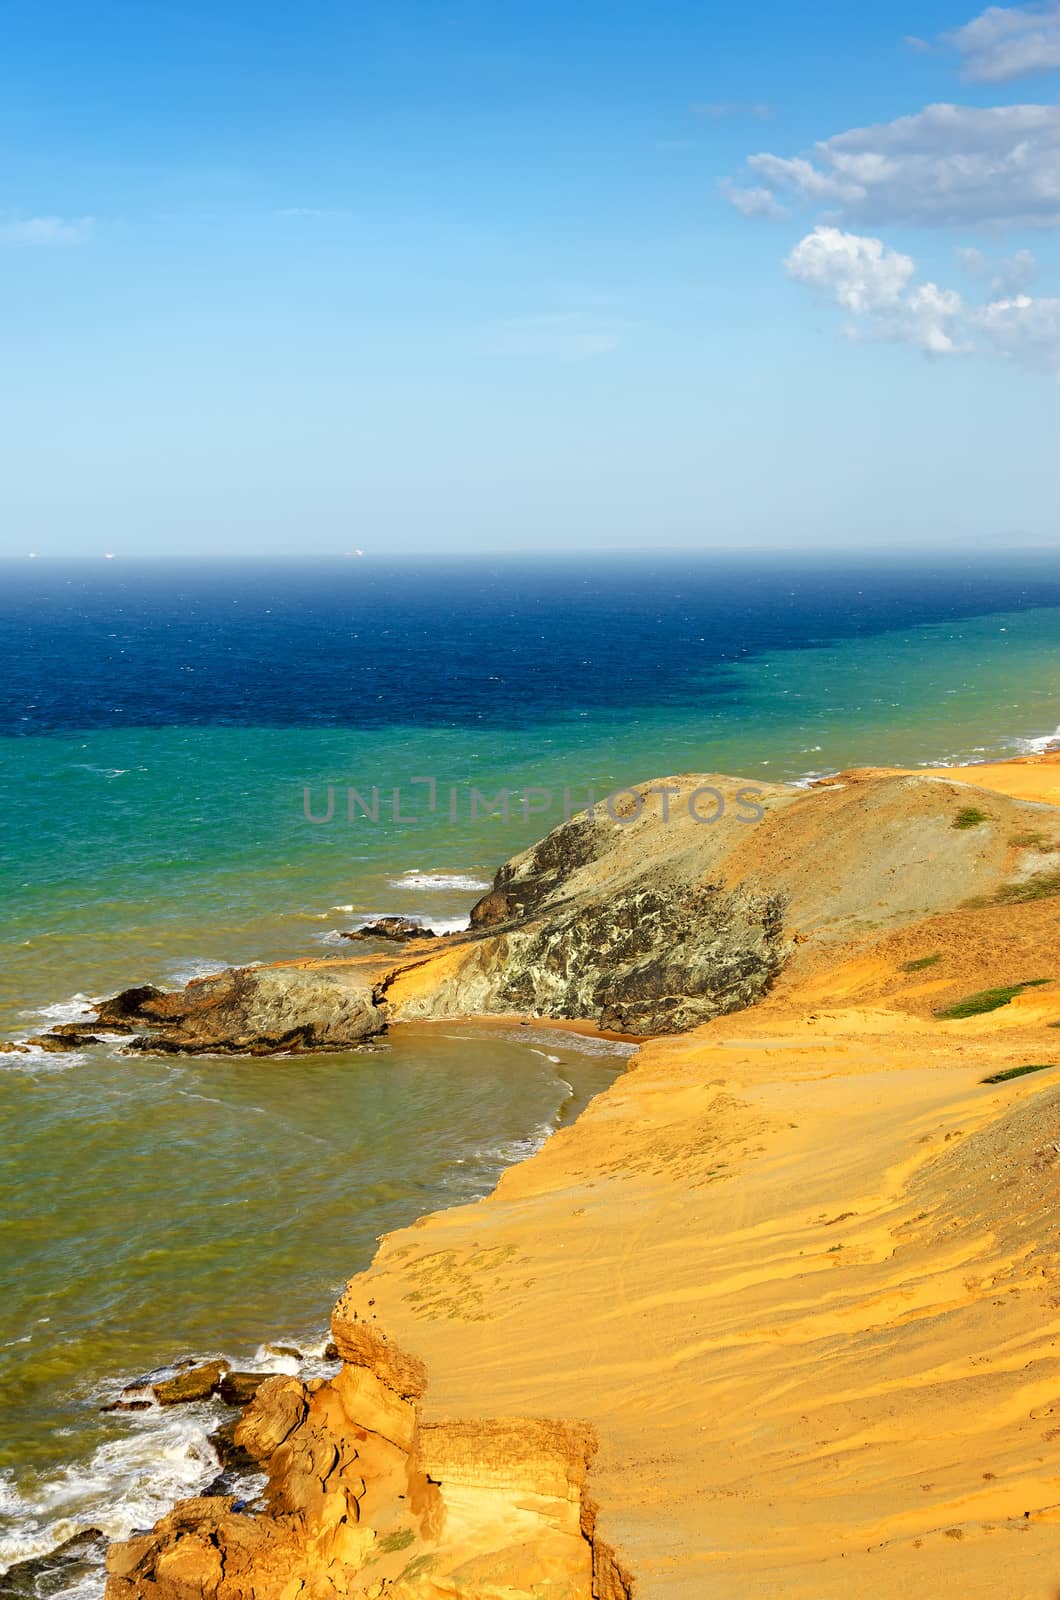 View of a dry desert coastline and the Caribbean Sea with various shades of blue near Cabo de la Vela in La Guajira, Colombia